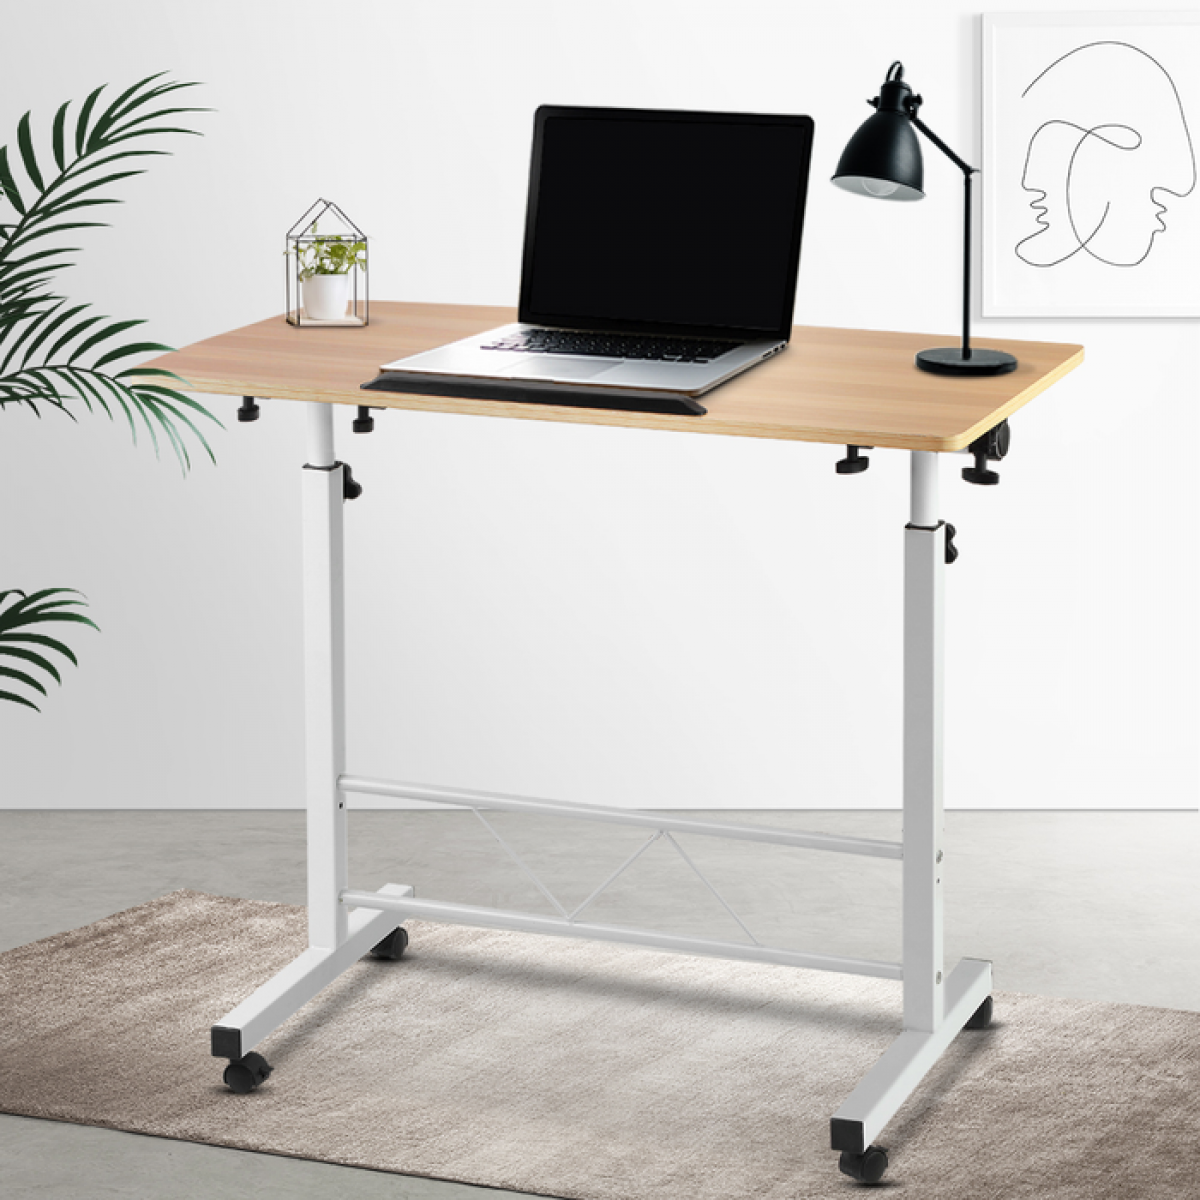 Portable Height Adjustable Mobile Laptop Sit Stand Desk Light wood